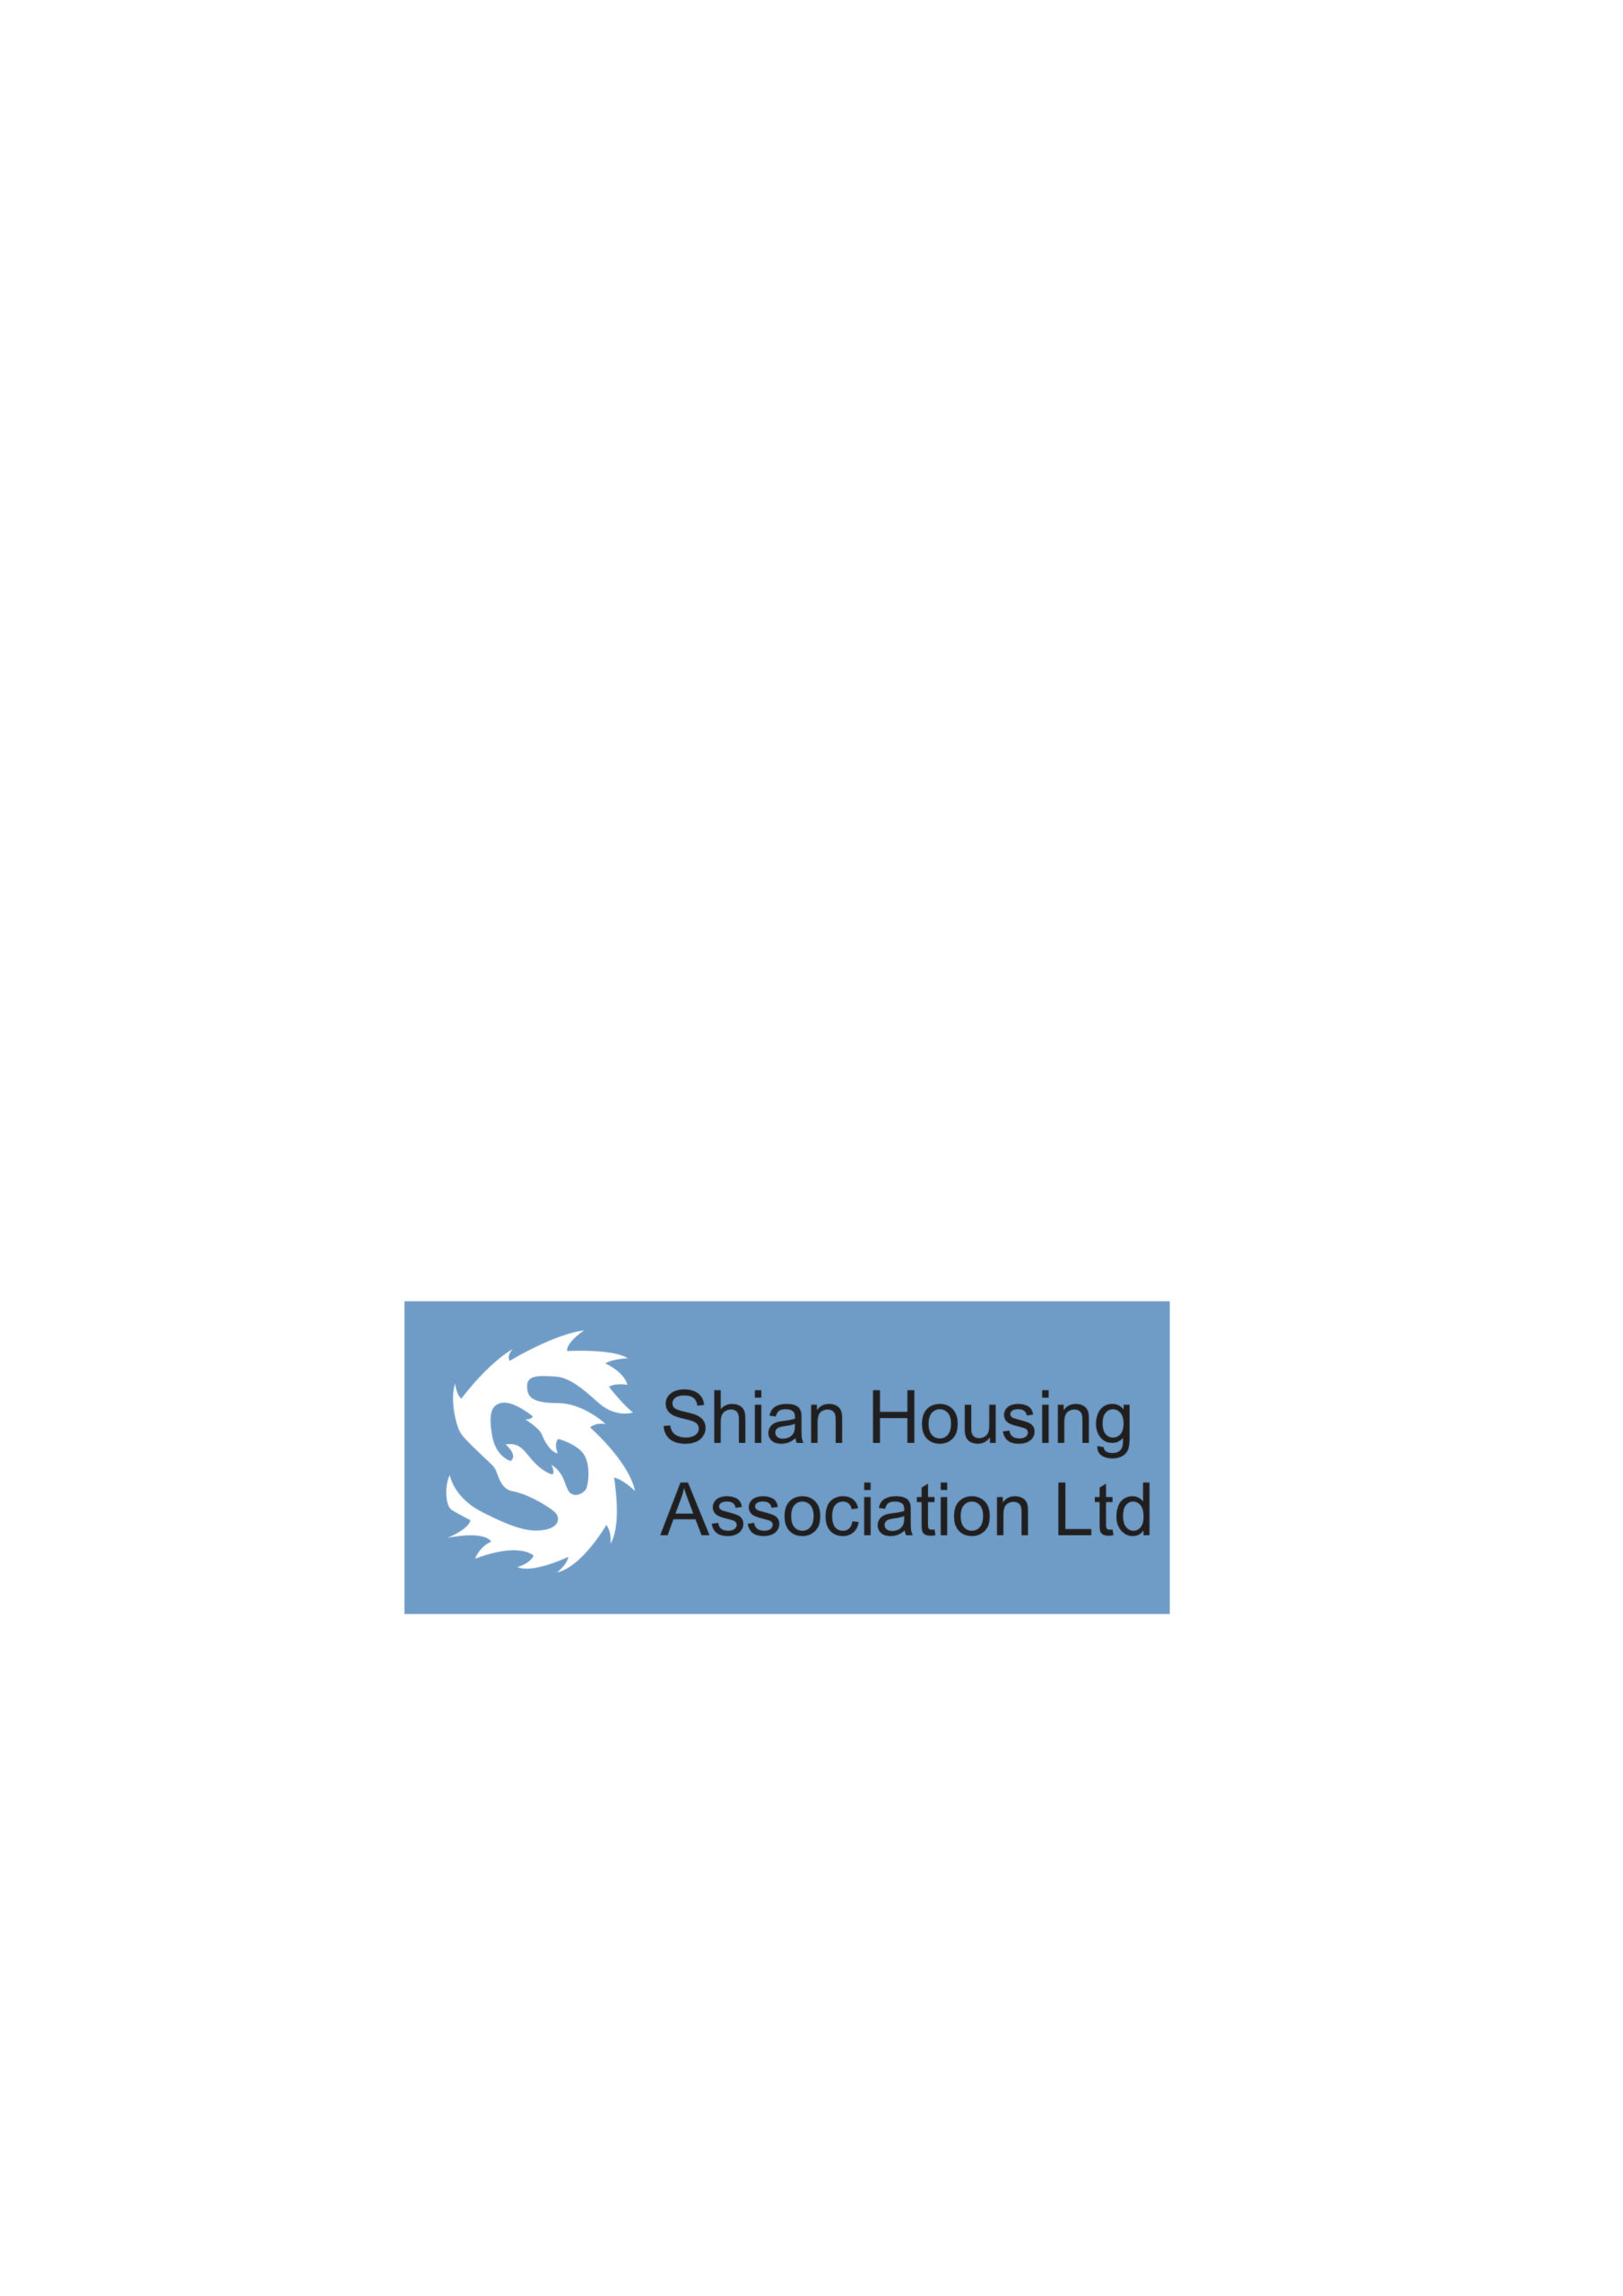 Shian Housing Association Ltd Logo